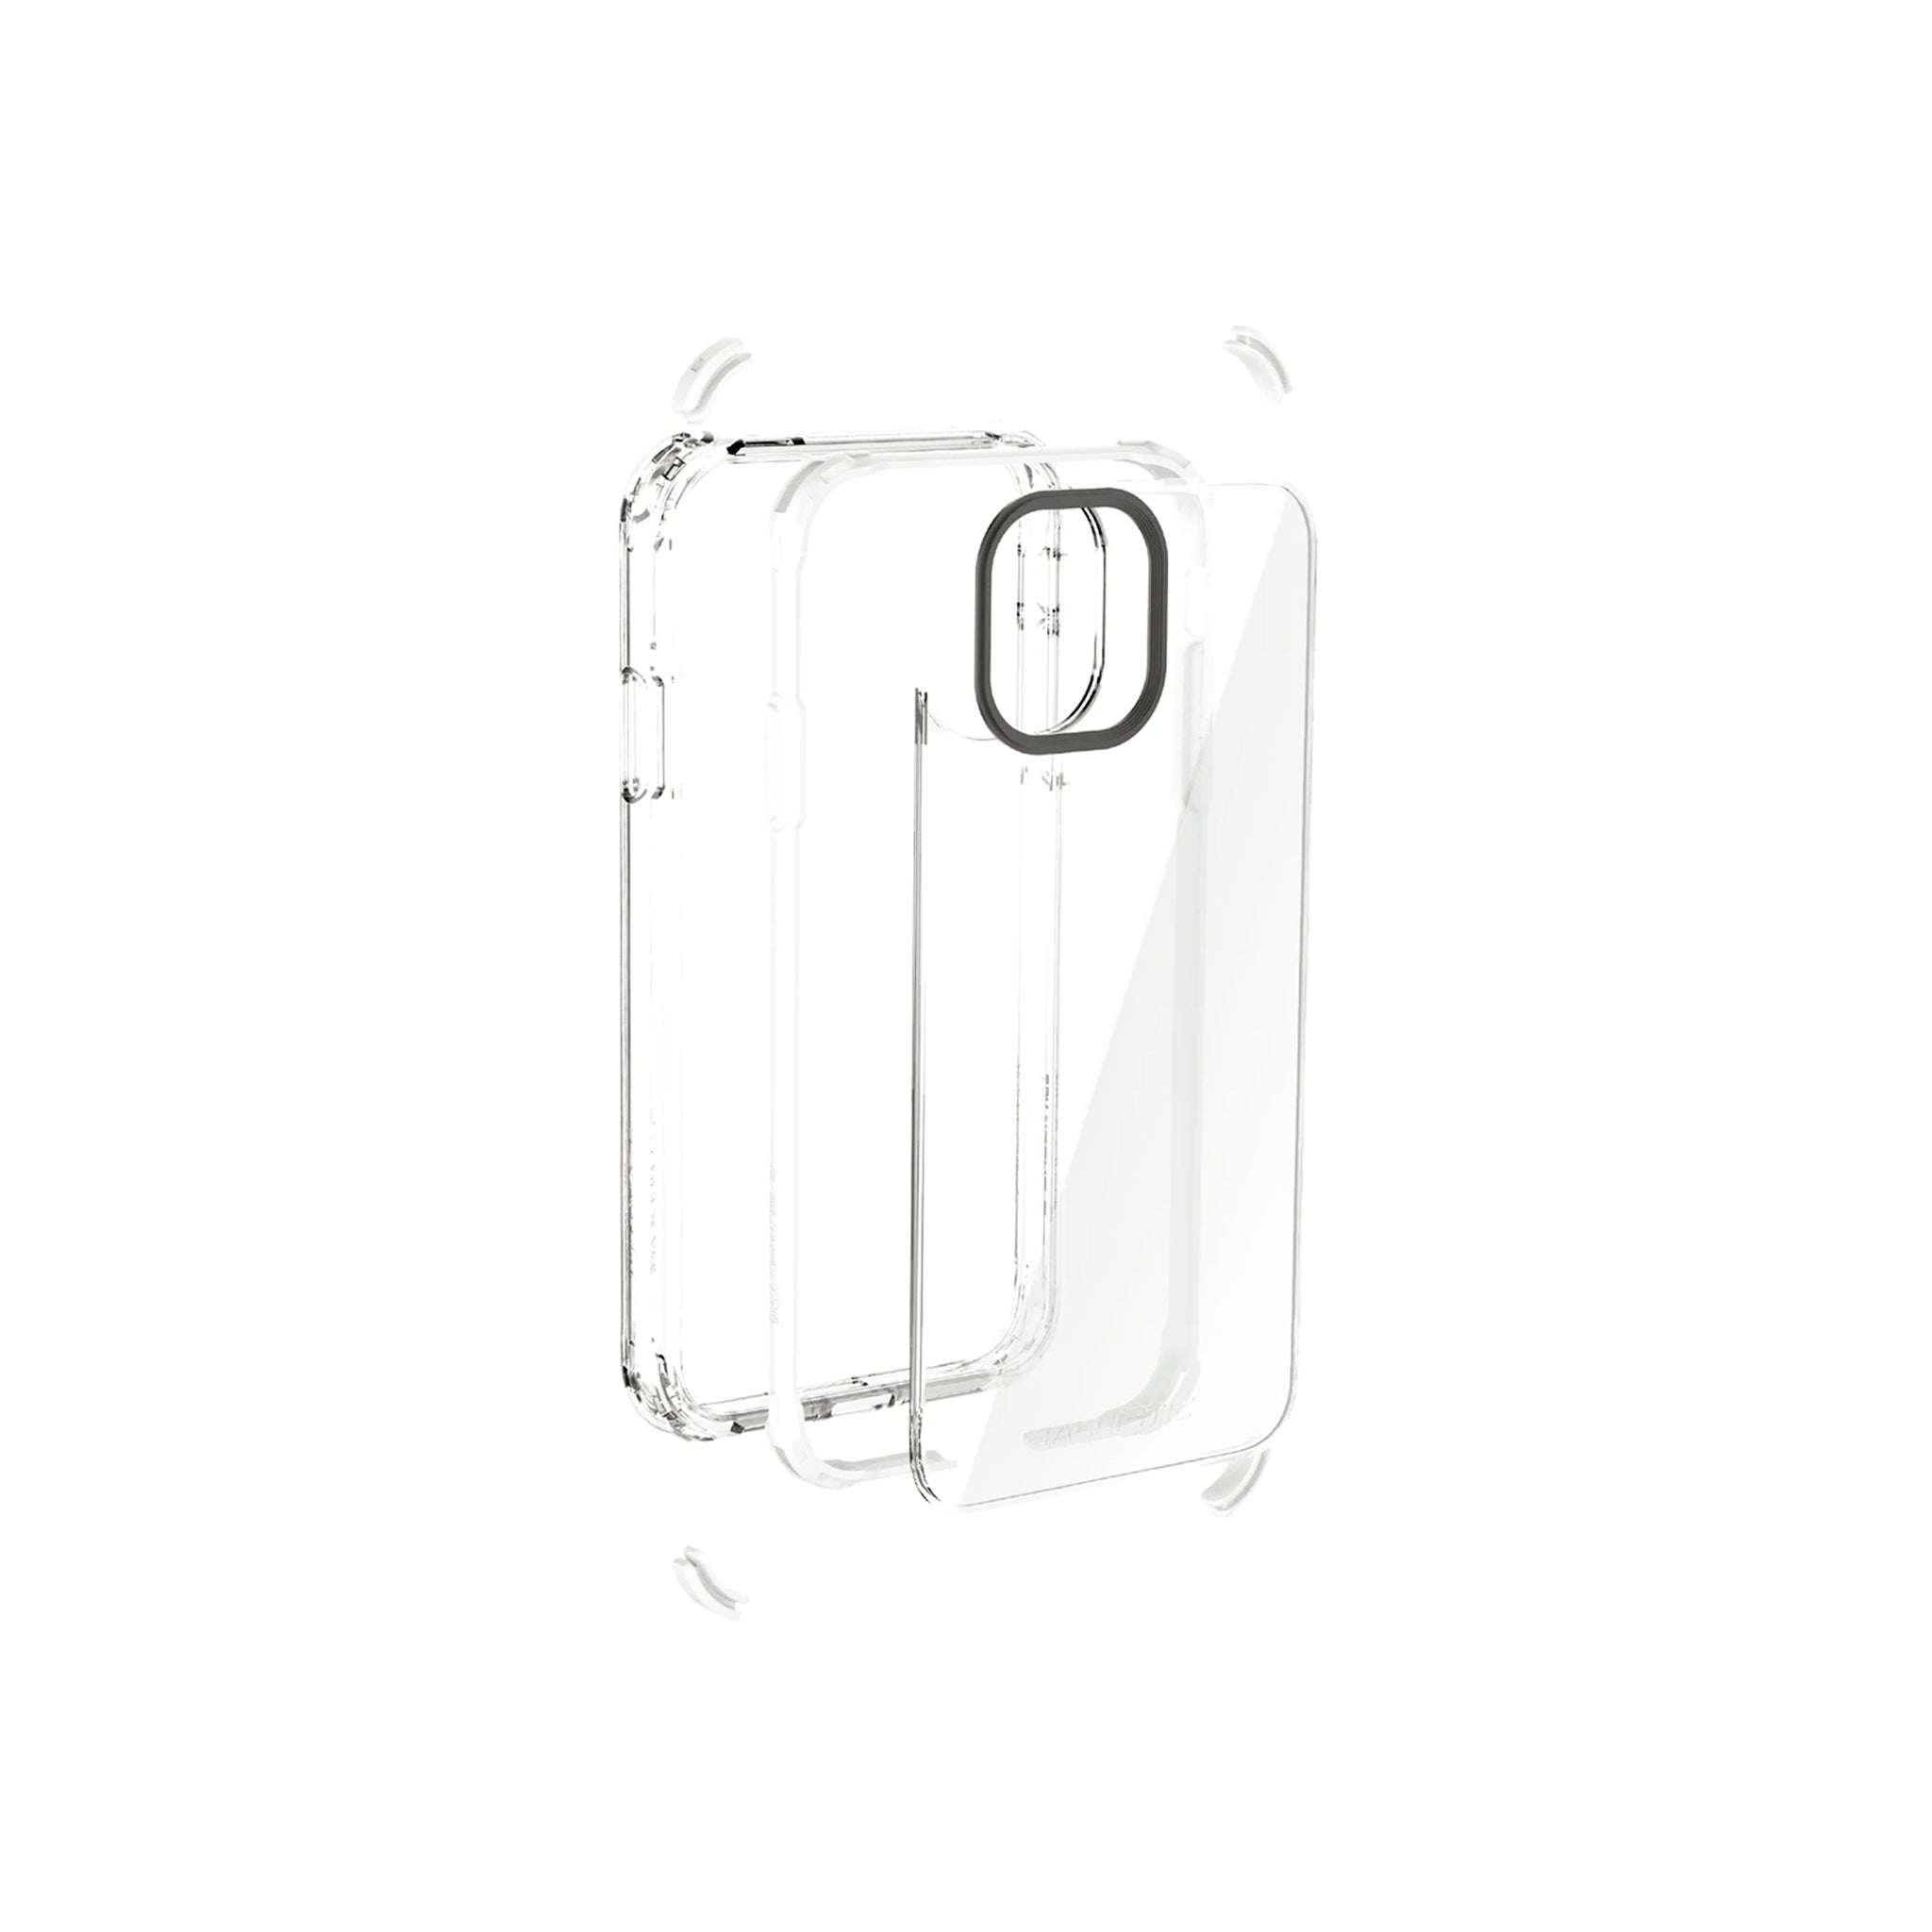 Ballistic - Bshock X90 Series For iPhone 11  - White